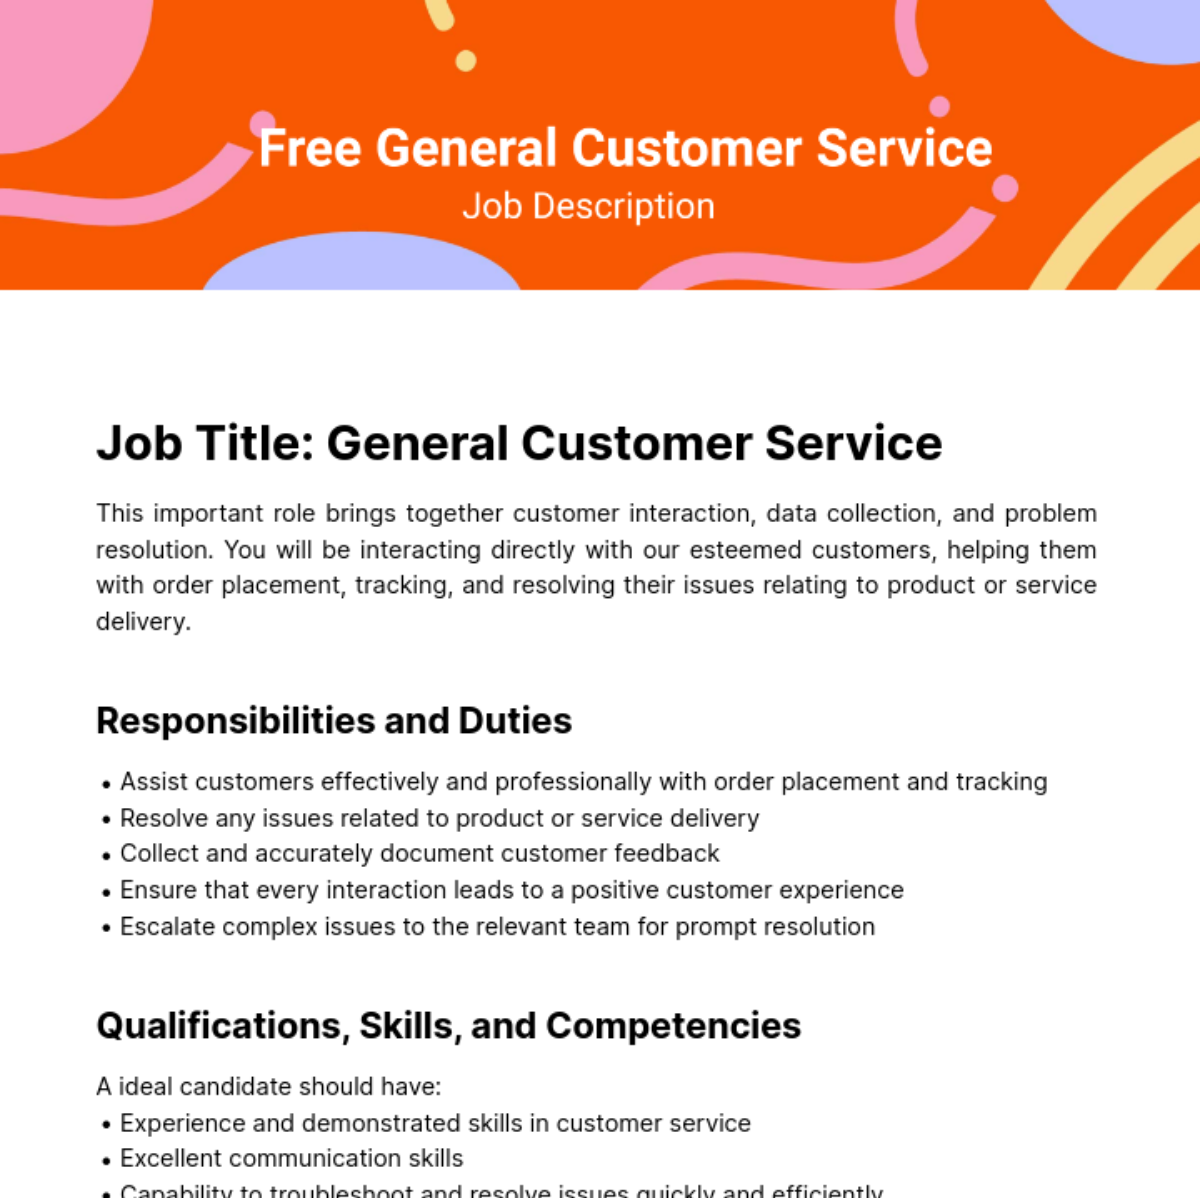 General Customer Service Job Description Template